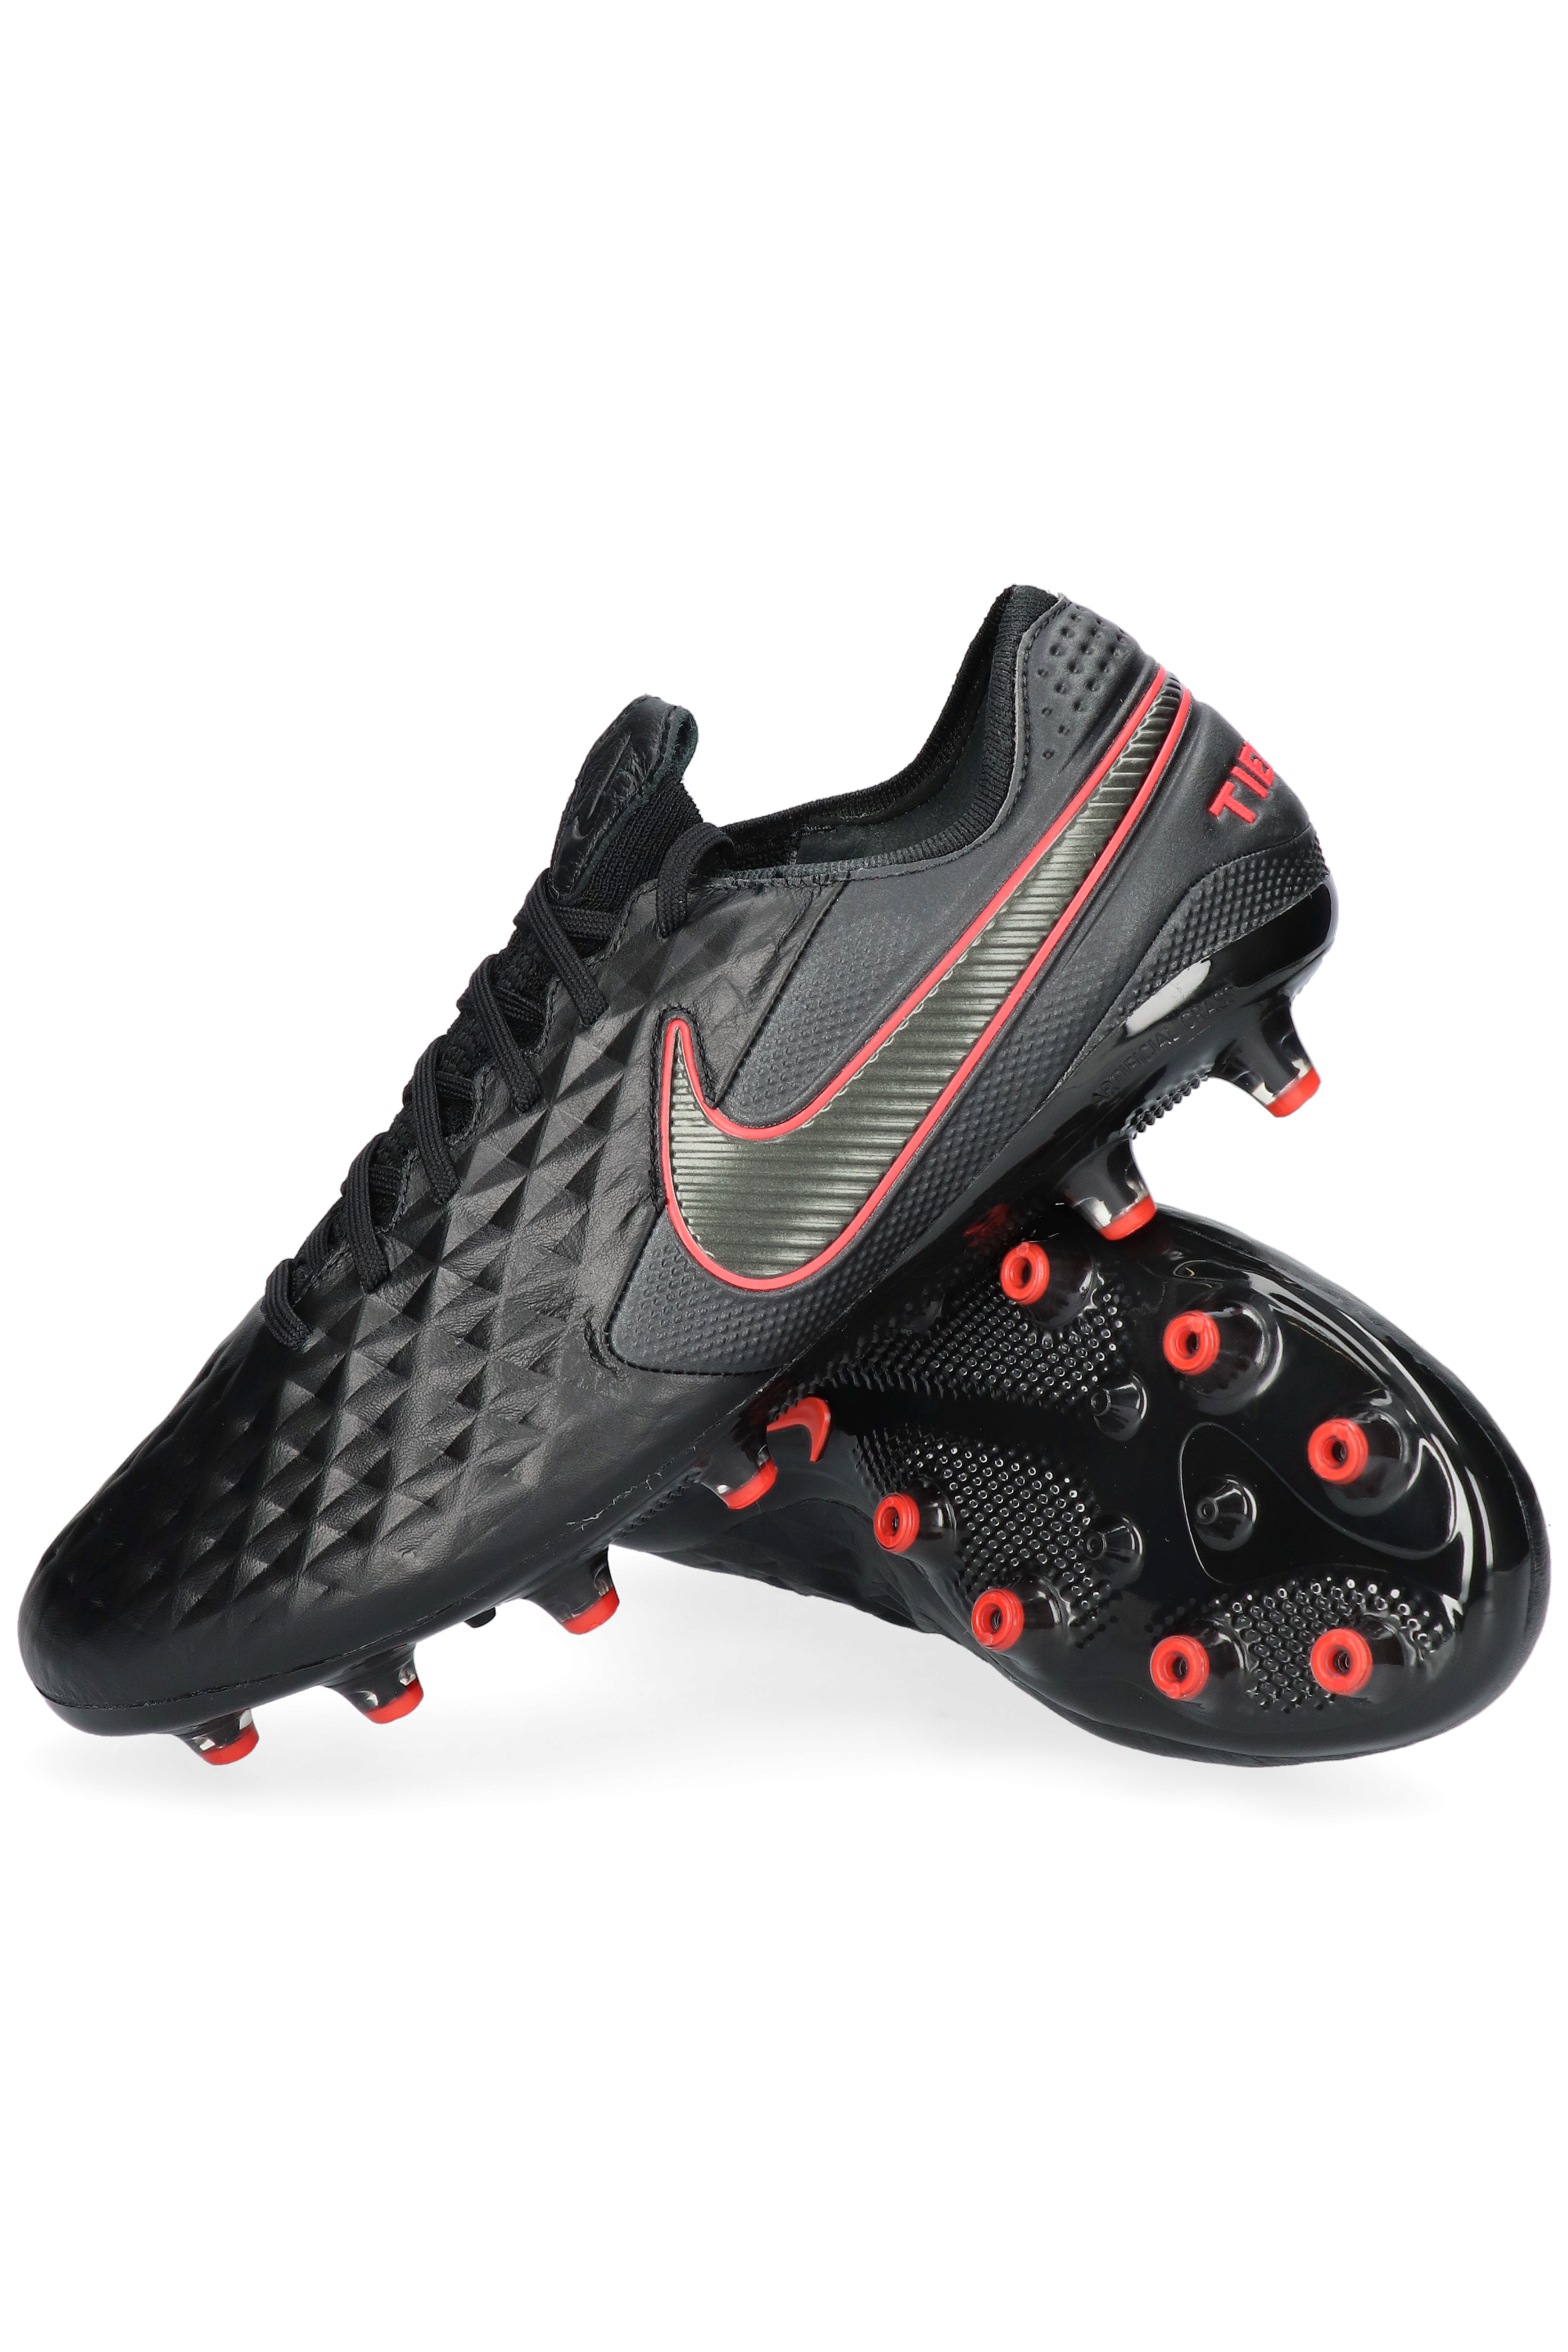 imán pausa tormenta Nike Tiempo Legend 8 Elite AG-PRO | R-GOL.com - Football boots & equipment